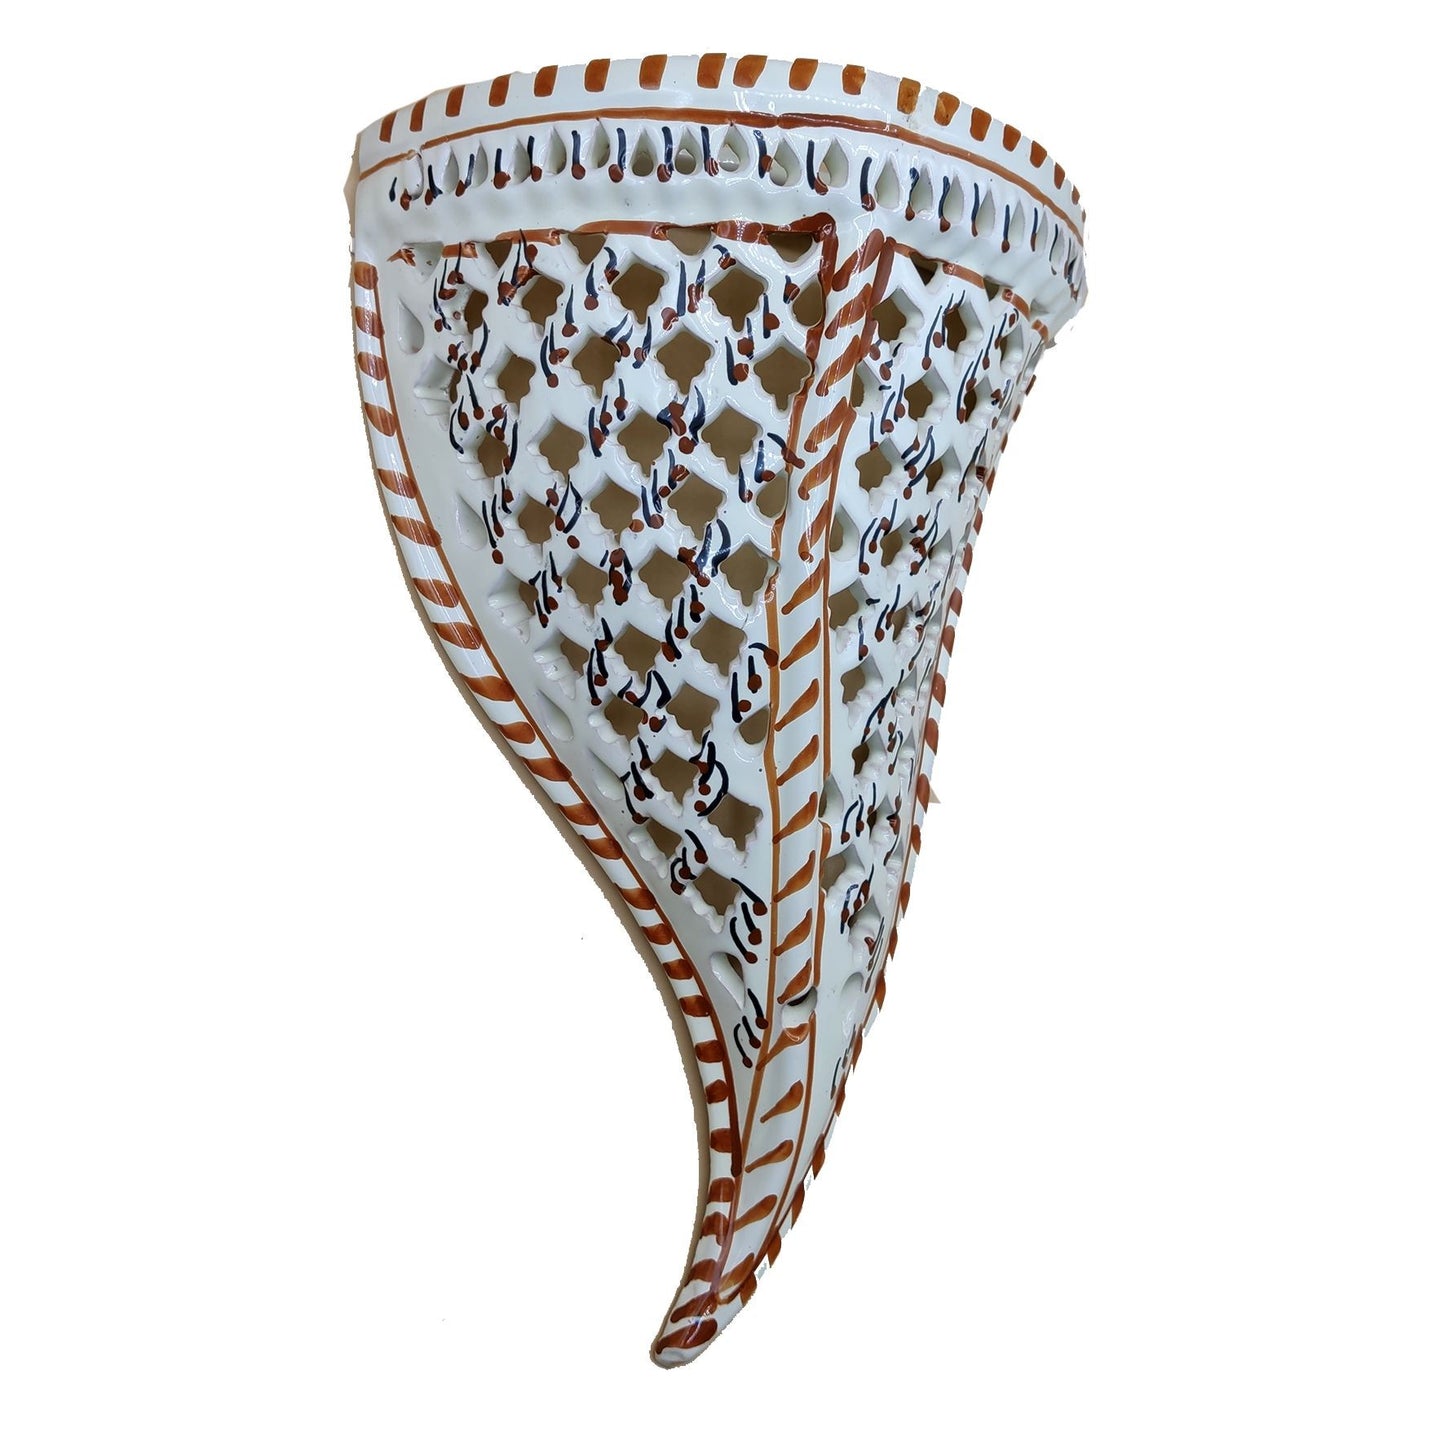 Arredo Etnico Applique Parete Lampada Ceramica Tunisina Marocchina 2411201204